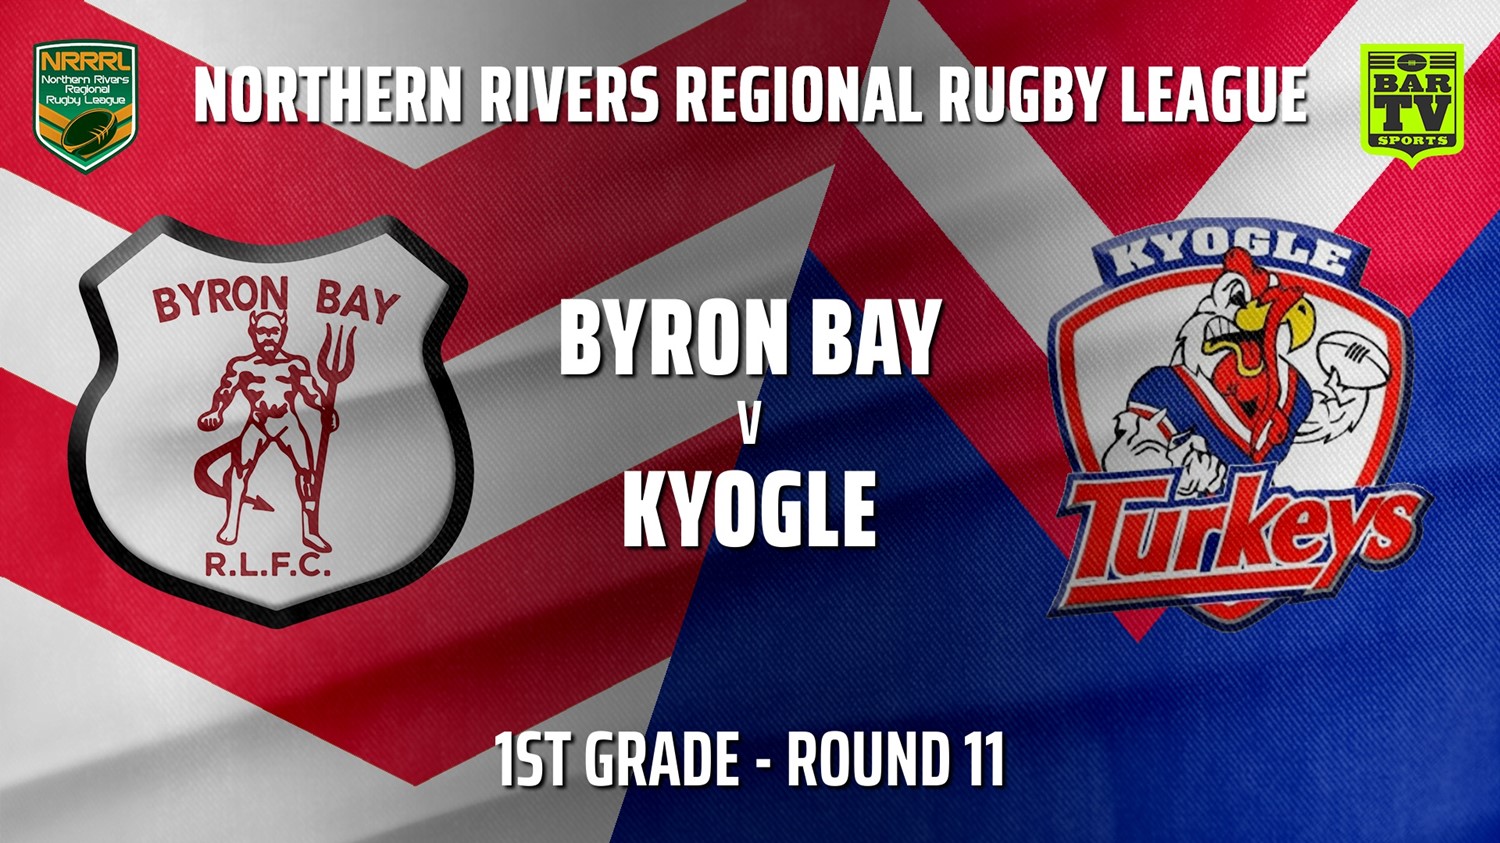 210718-Northern Rivers Round 11 - 1st Grade - Byron Bay Red Devils v Kyogle Turkeys Minigame Slate Image